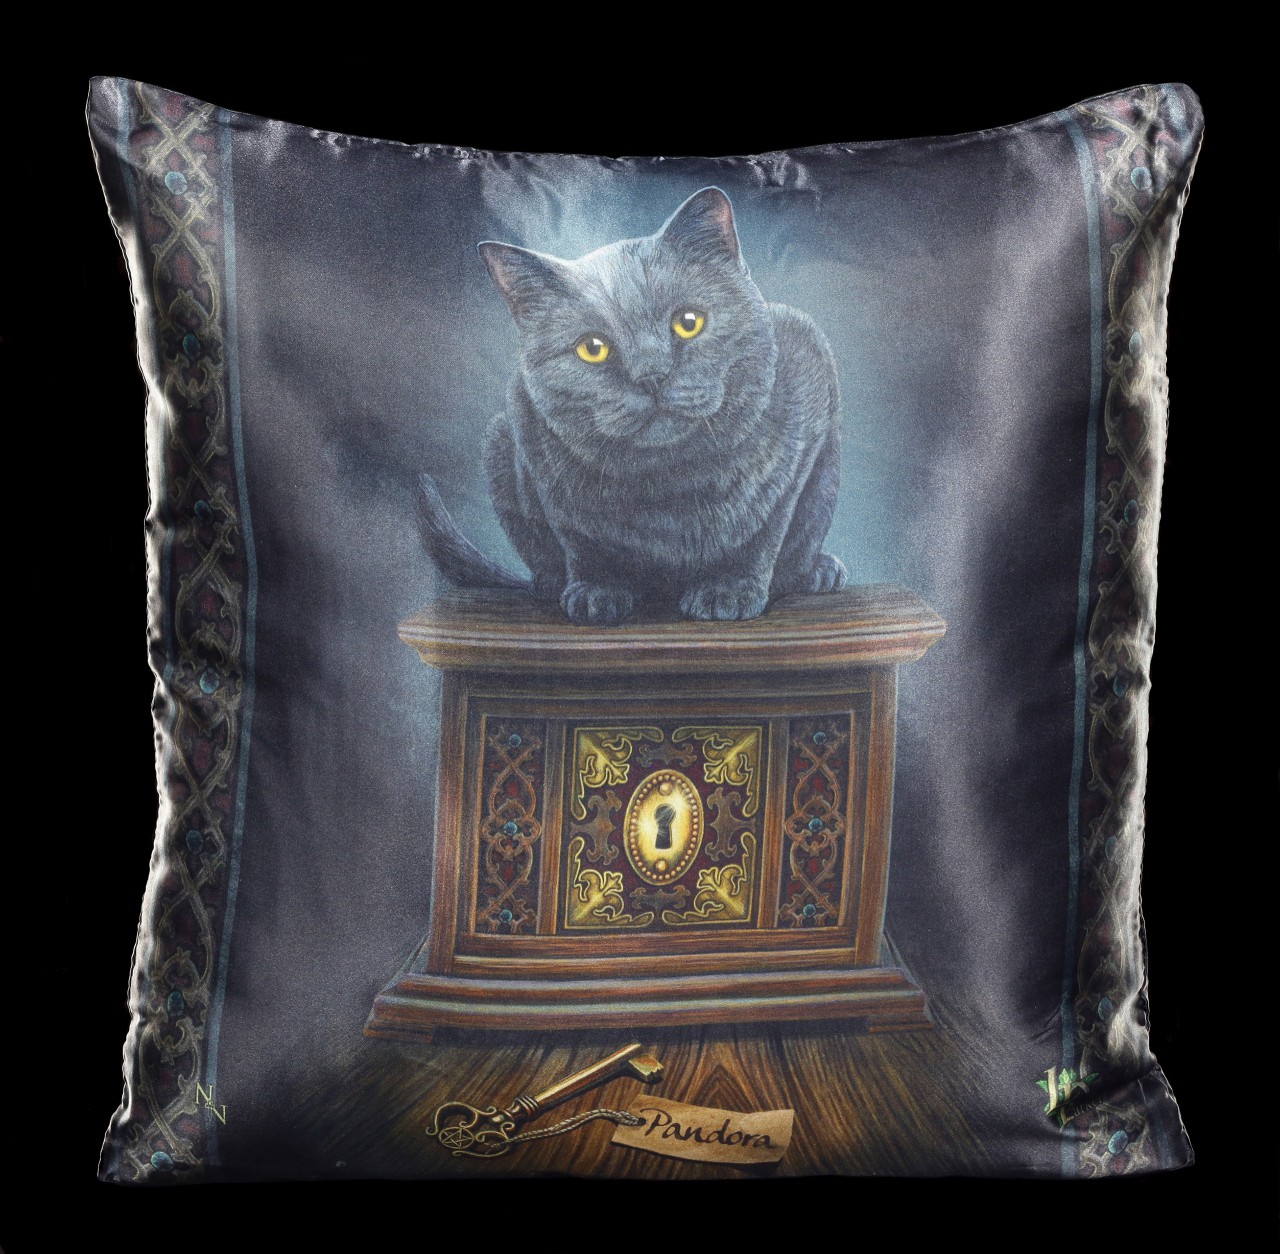 Cushion with Cat - Pandora's Box